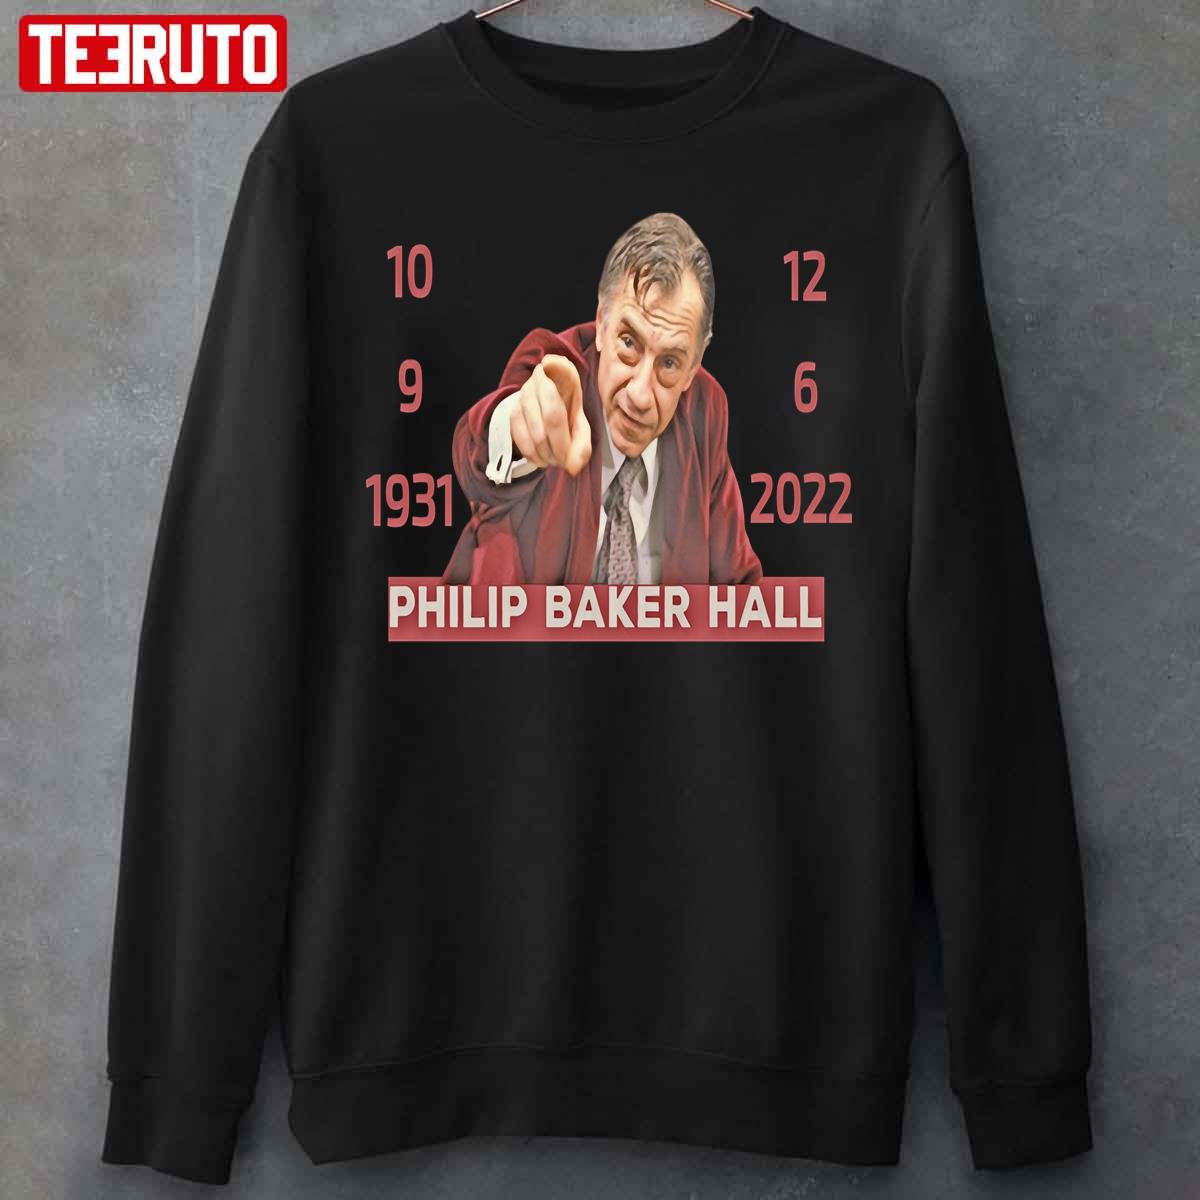 Philip Baker Hall RIP Unisex T-Shirt